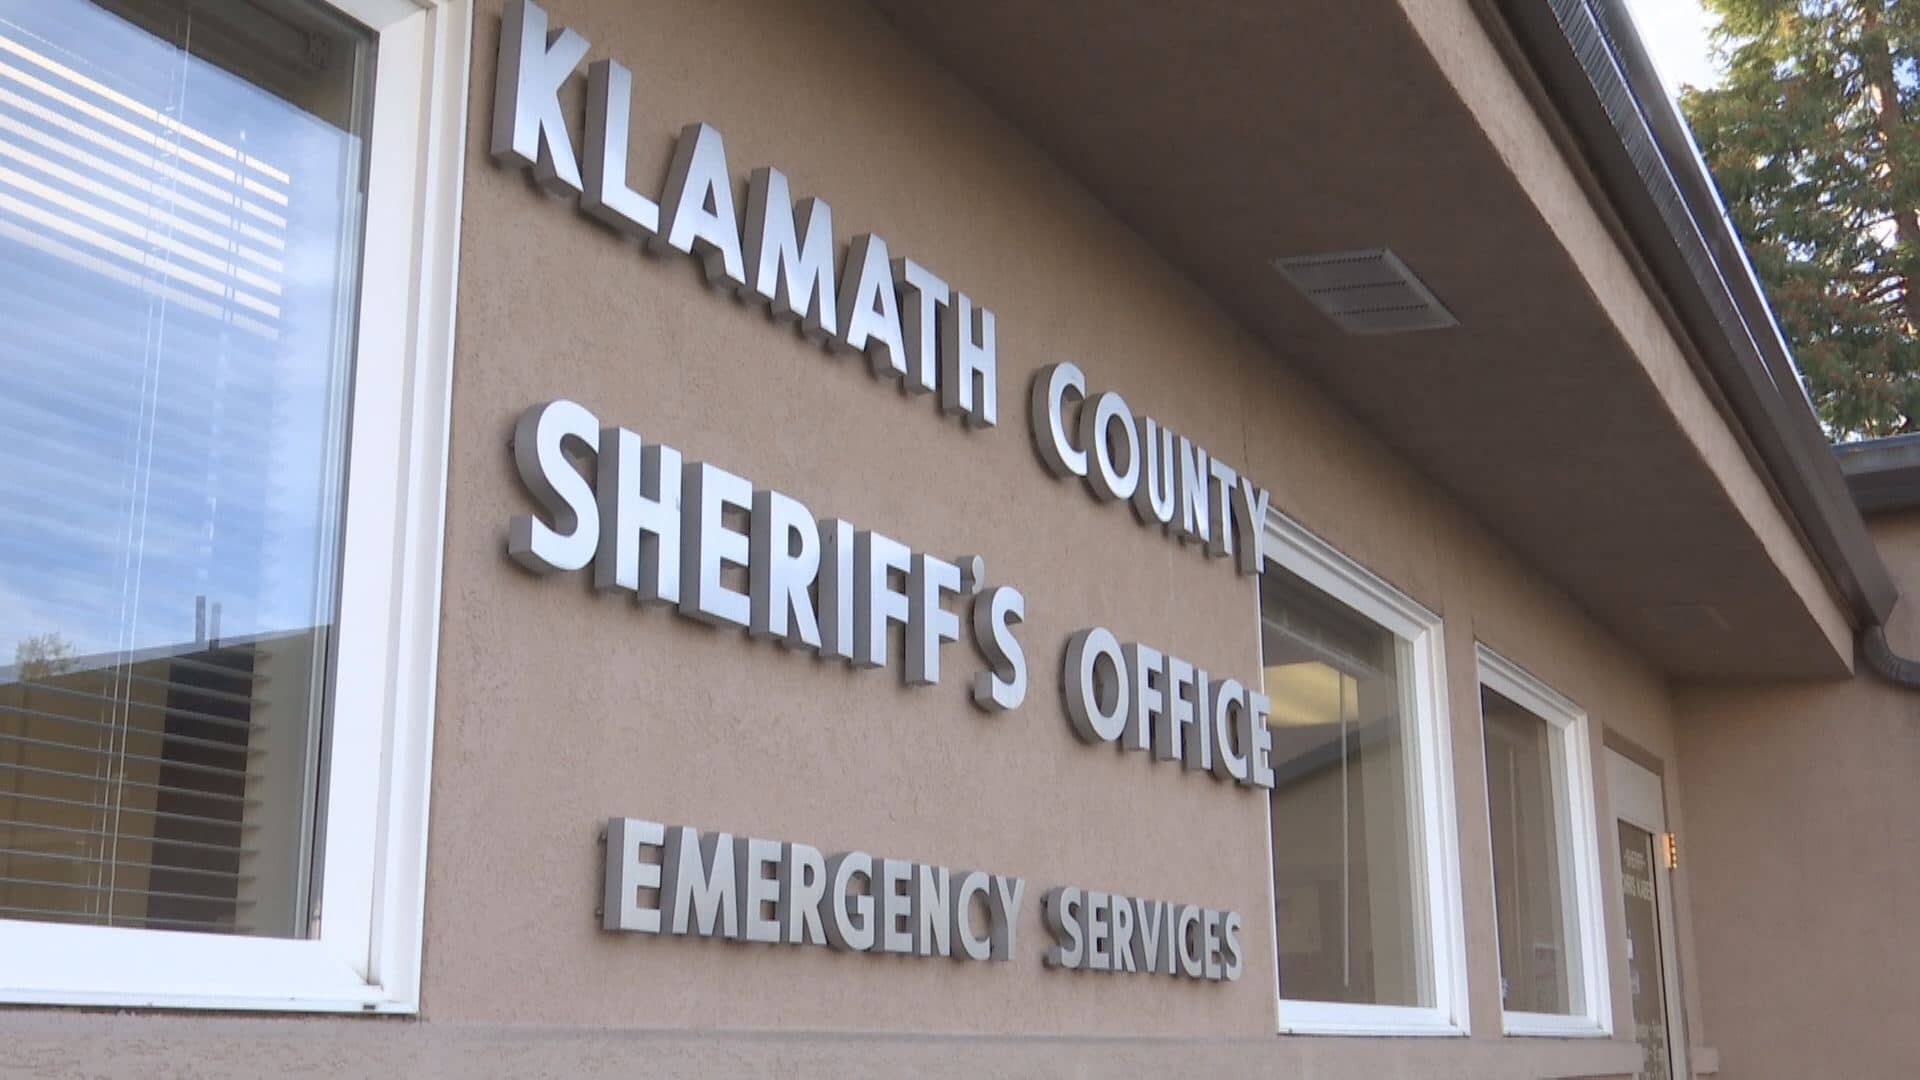 Image of Klamath County Sheriff's Office